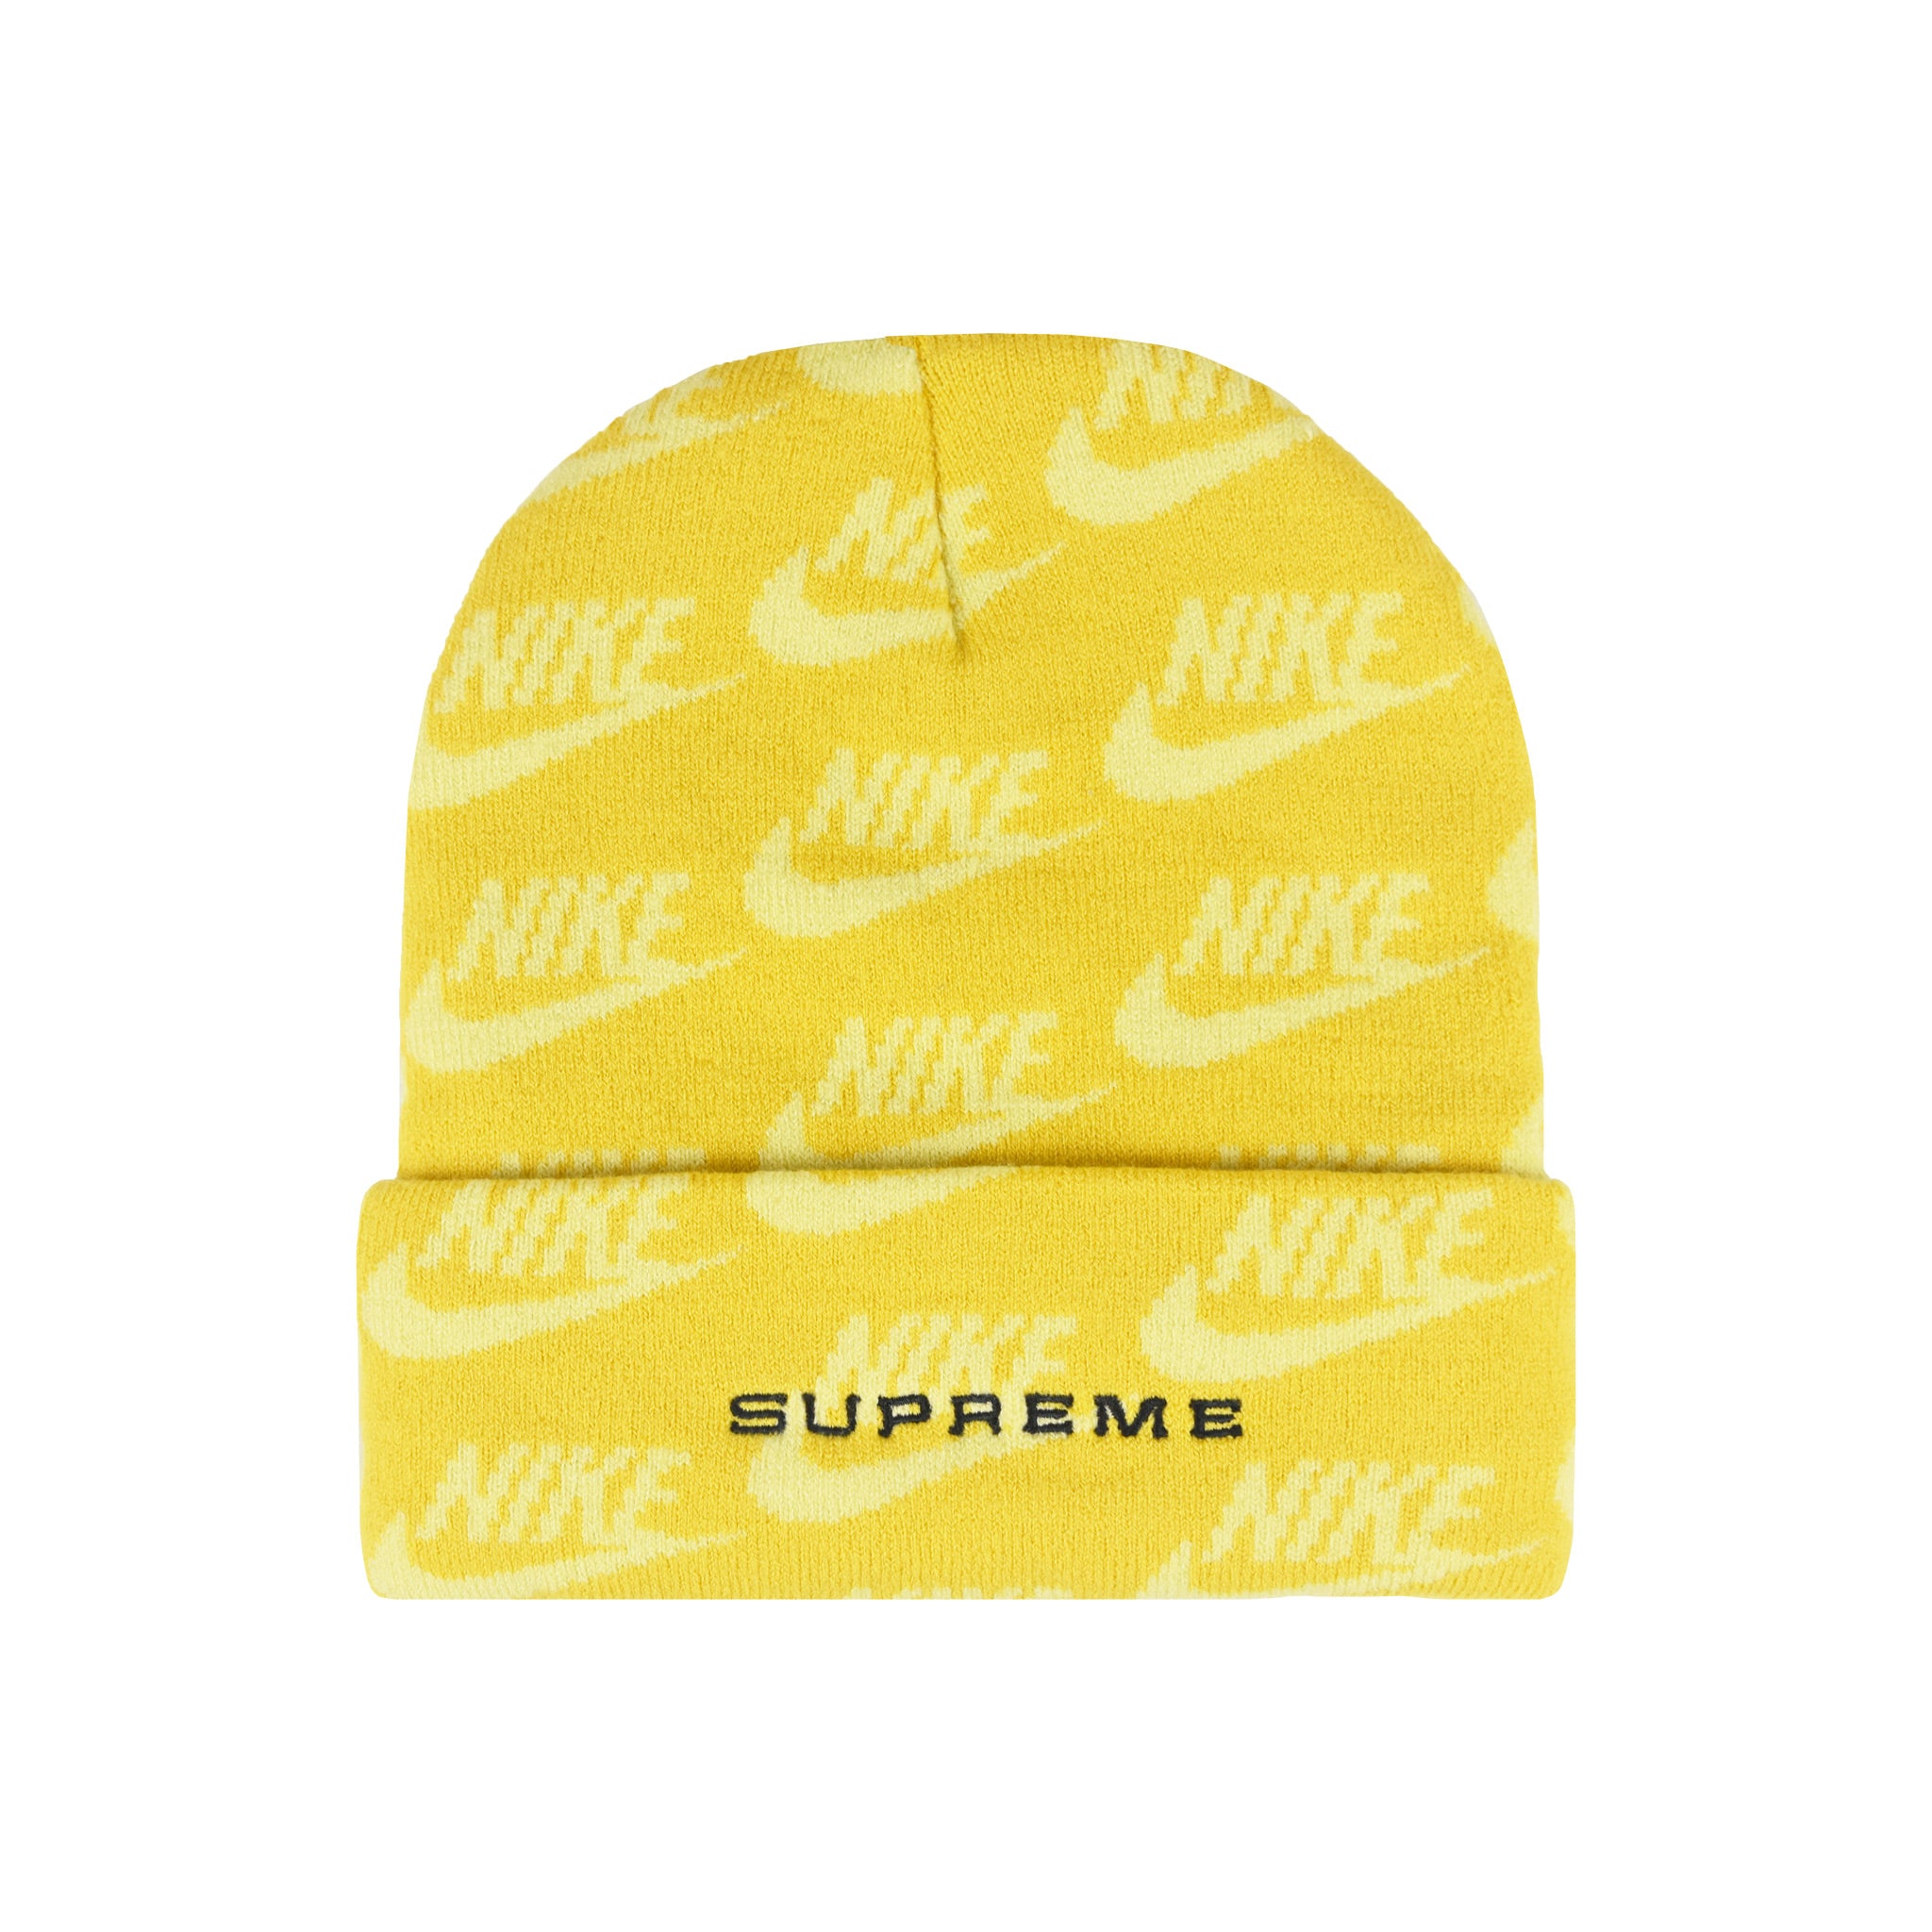 Supreme x Nike Jacquard Logo Beanie - Pale Yellow | Australia New Zealand